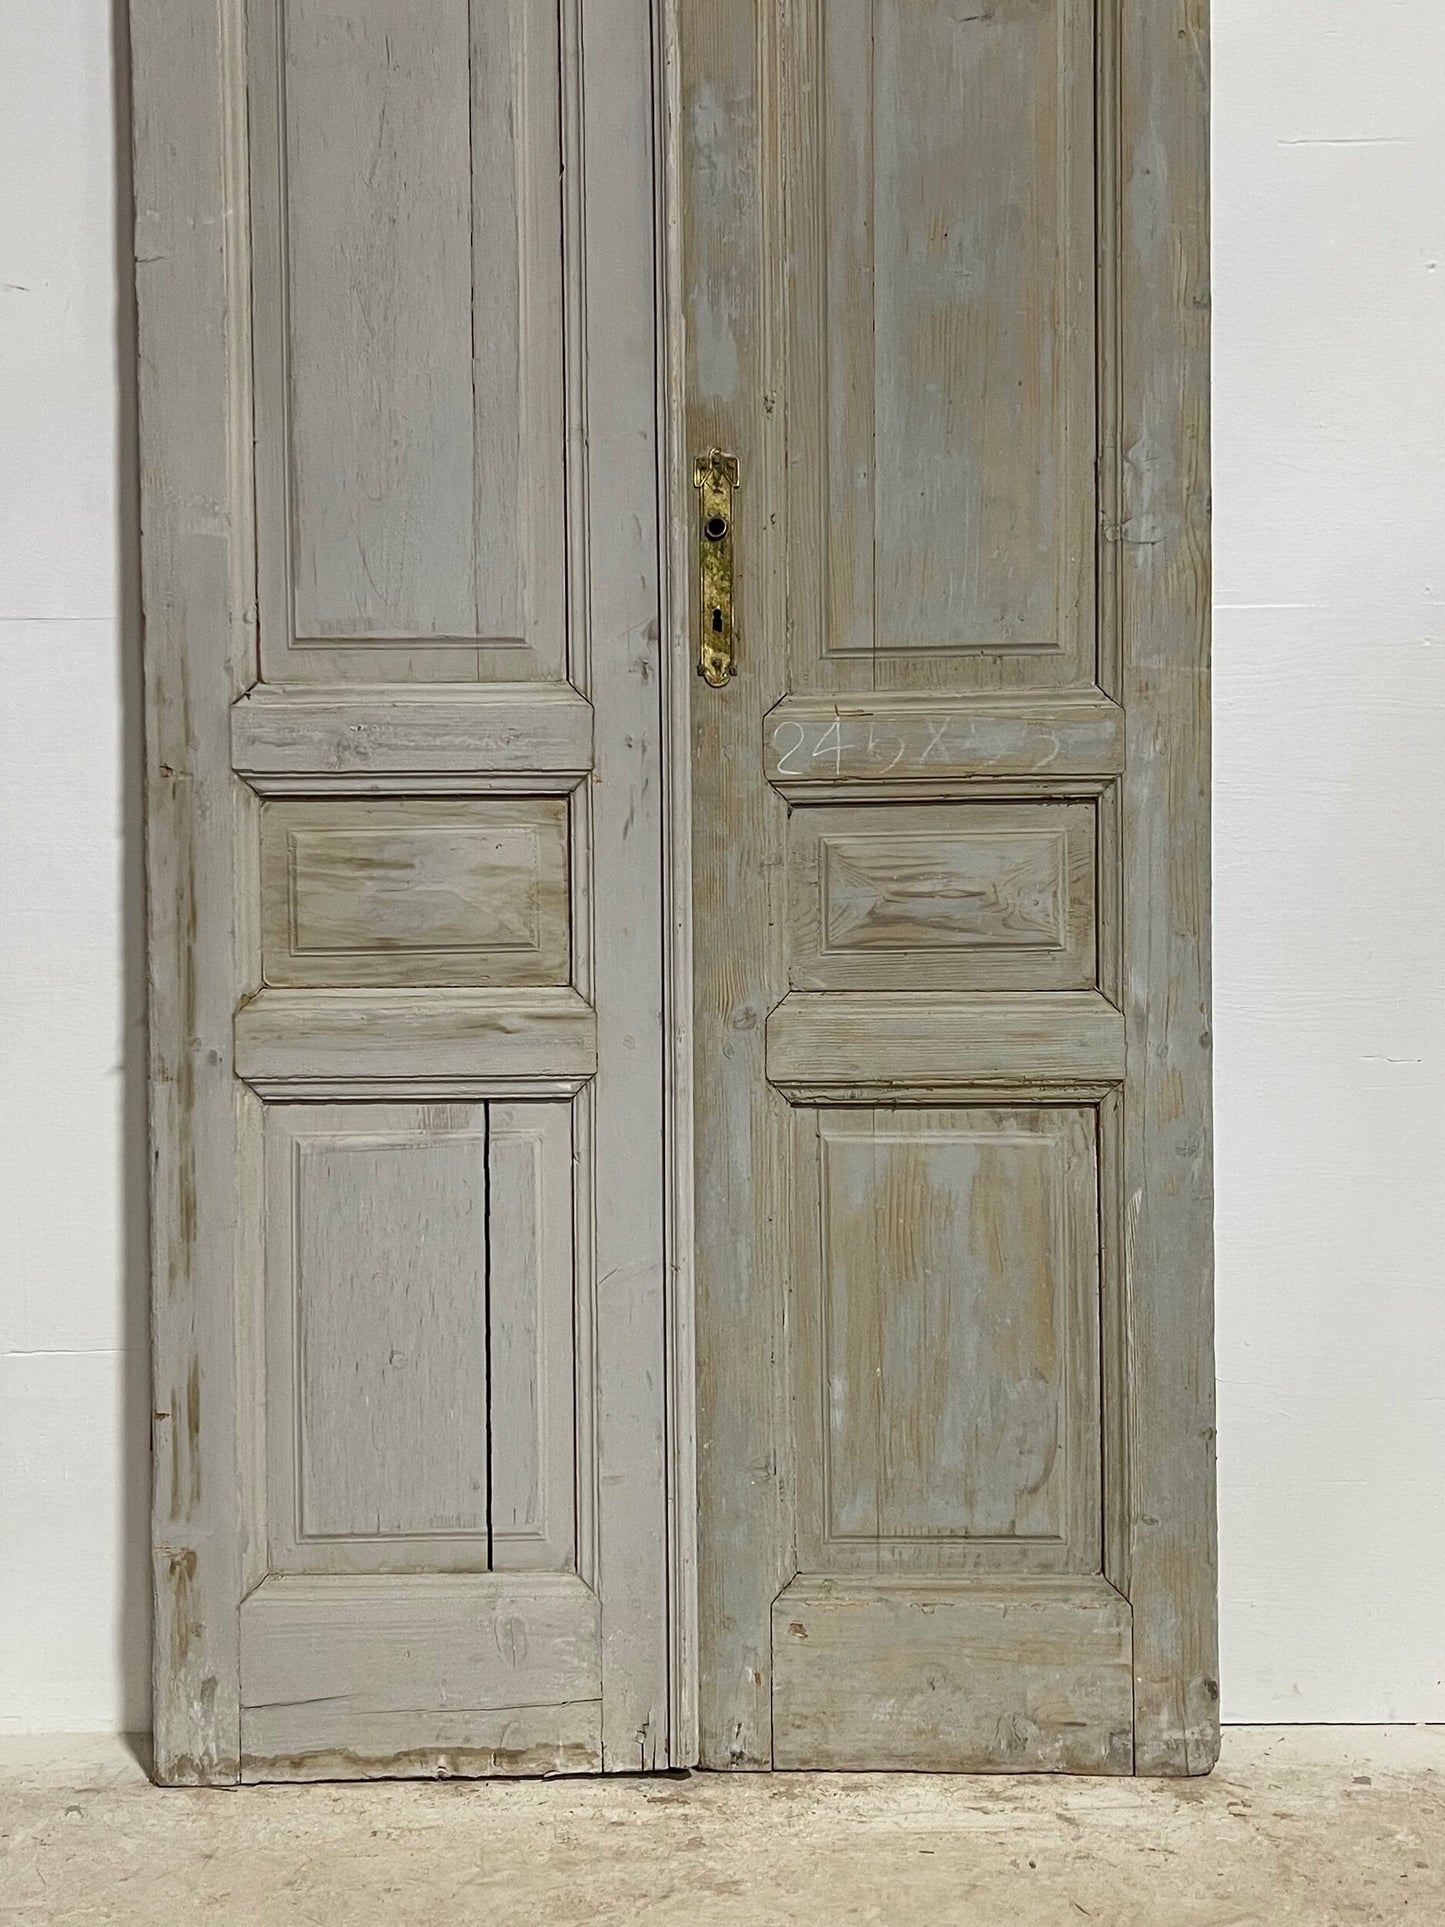 Antique French doors (96x43.75) H0126s